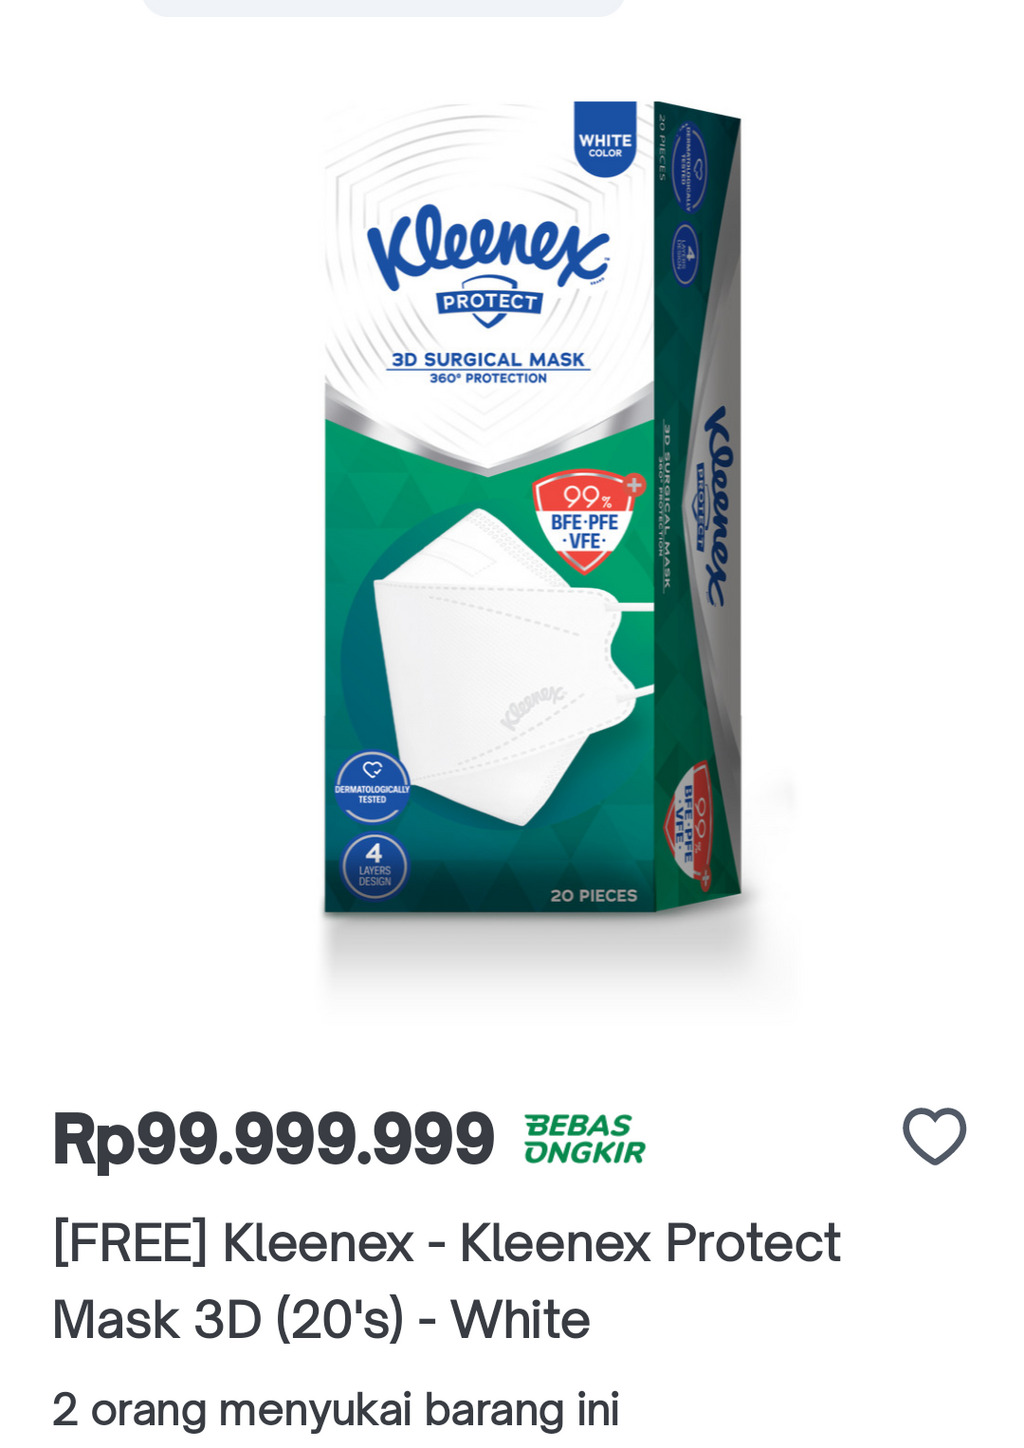 Masker Kleenex is 20 lembar = Rp100 juta